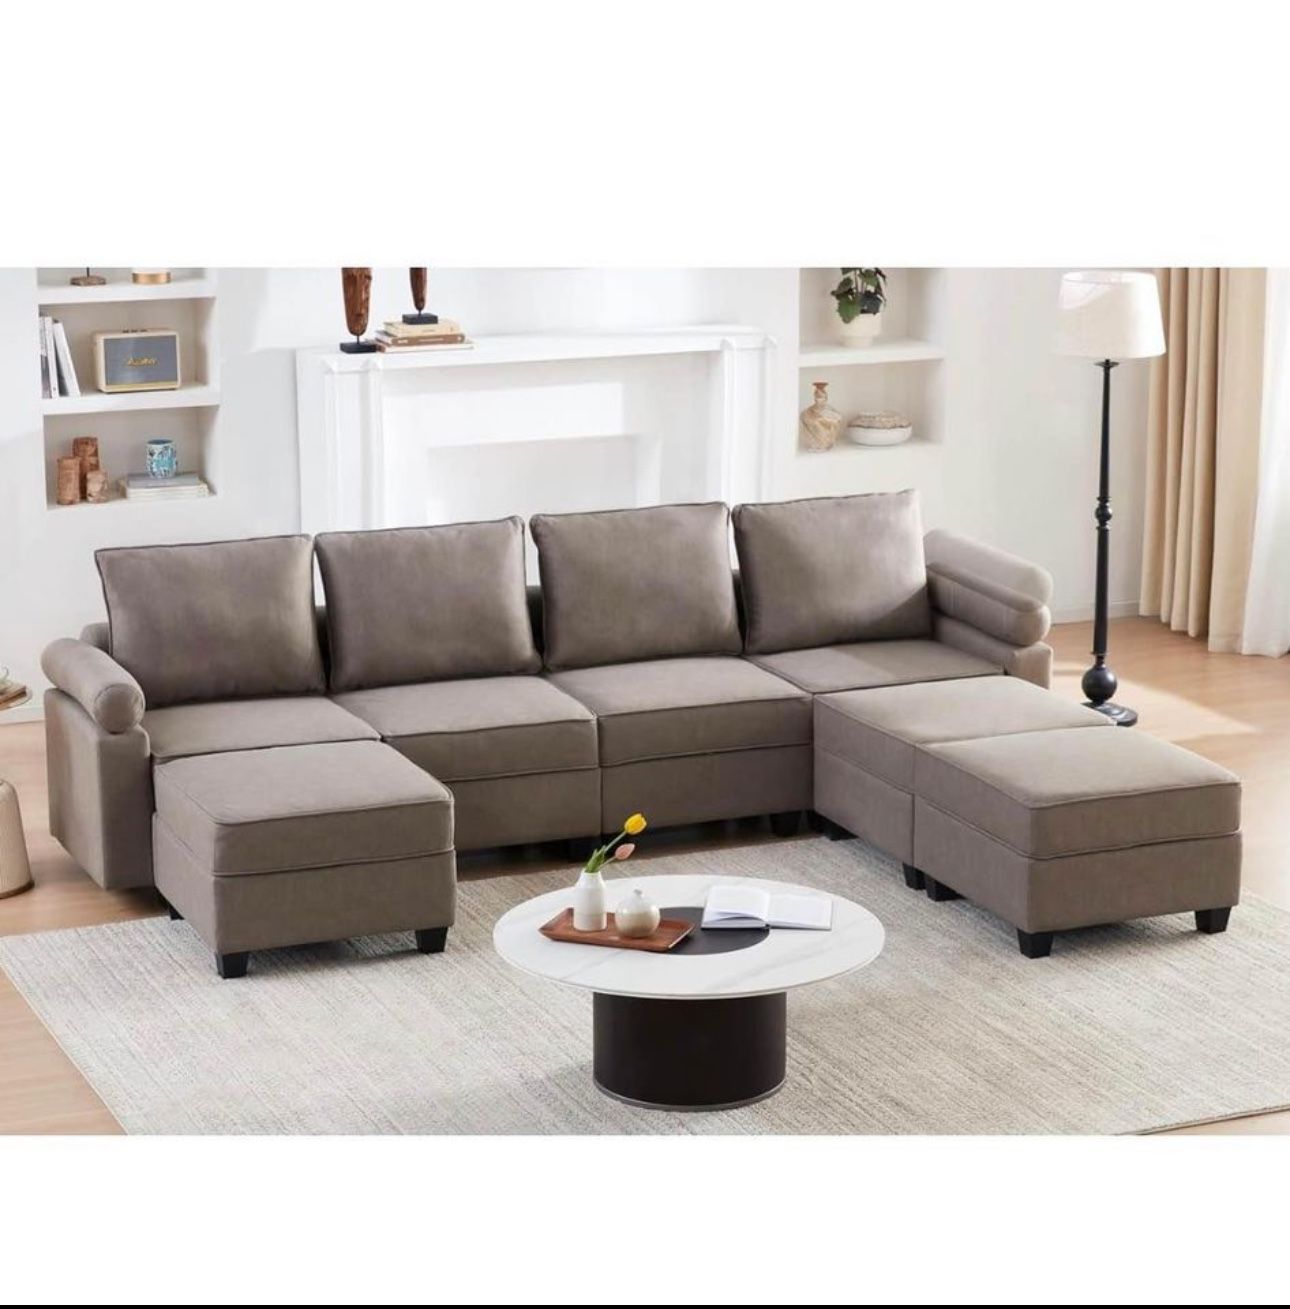 Modular Sectional/Sleeper Sofa